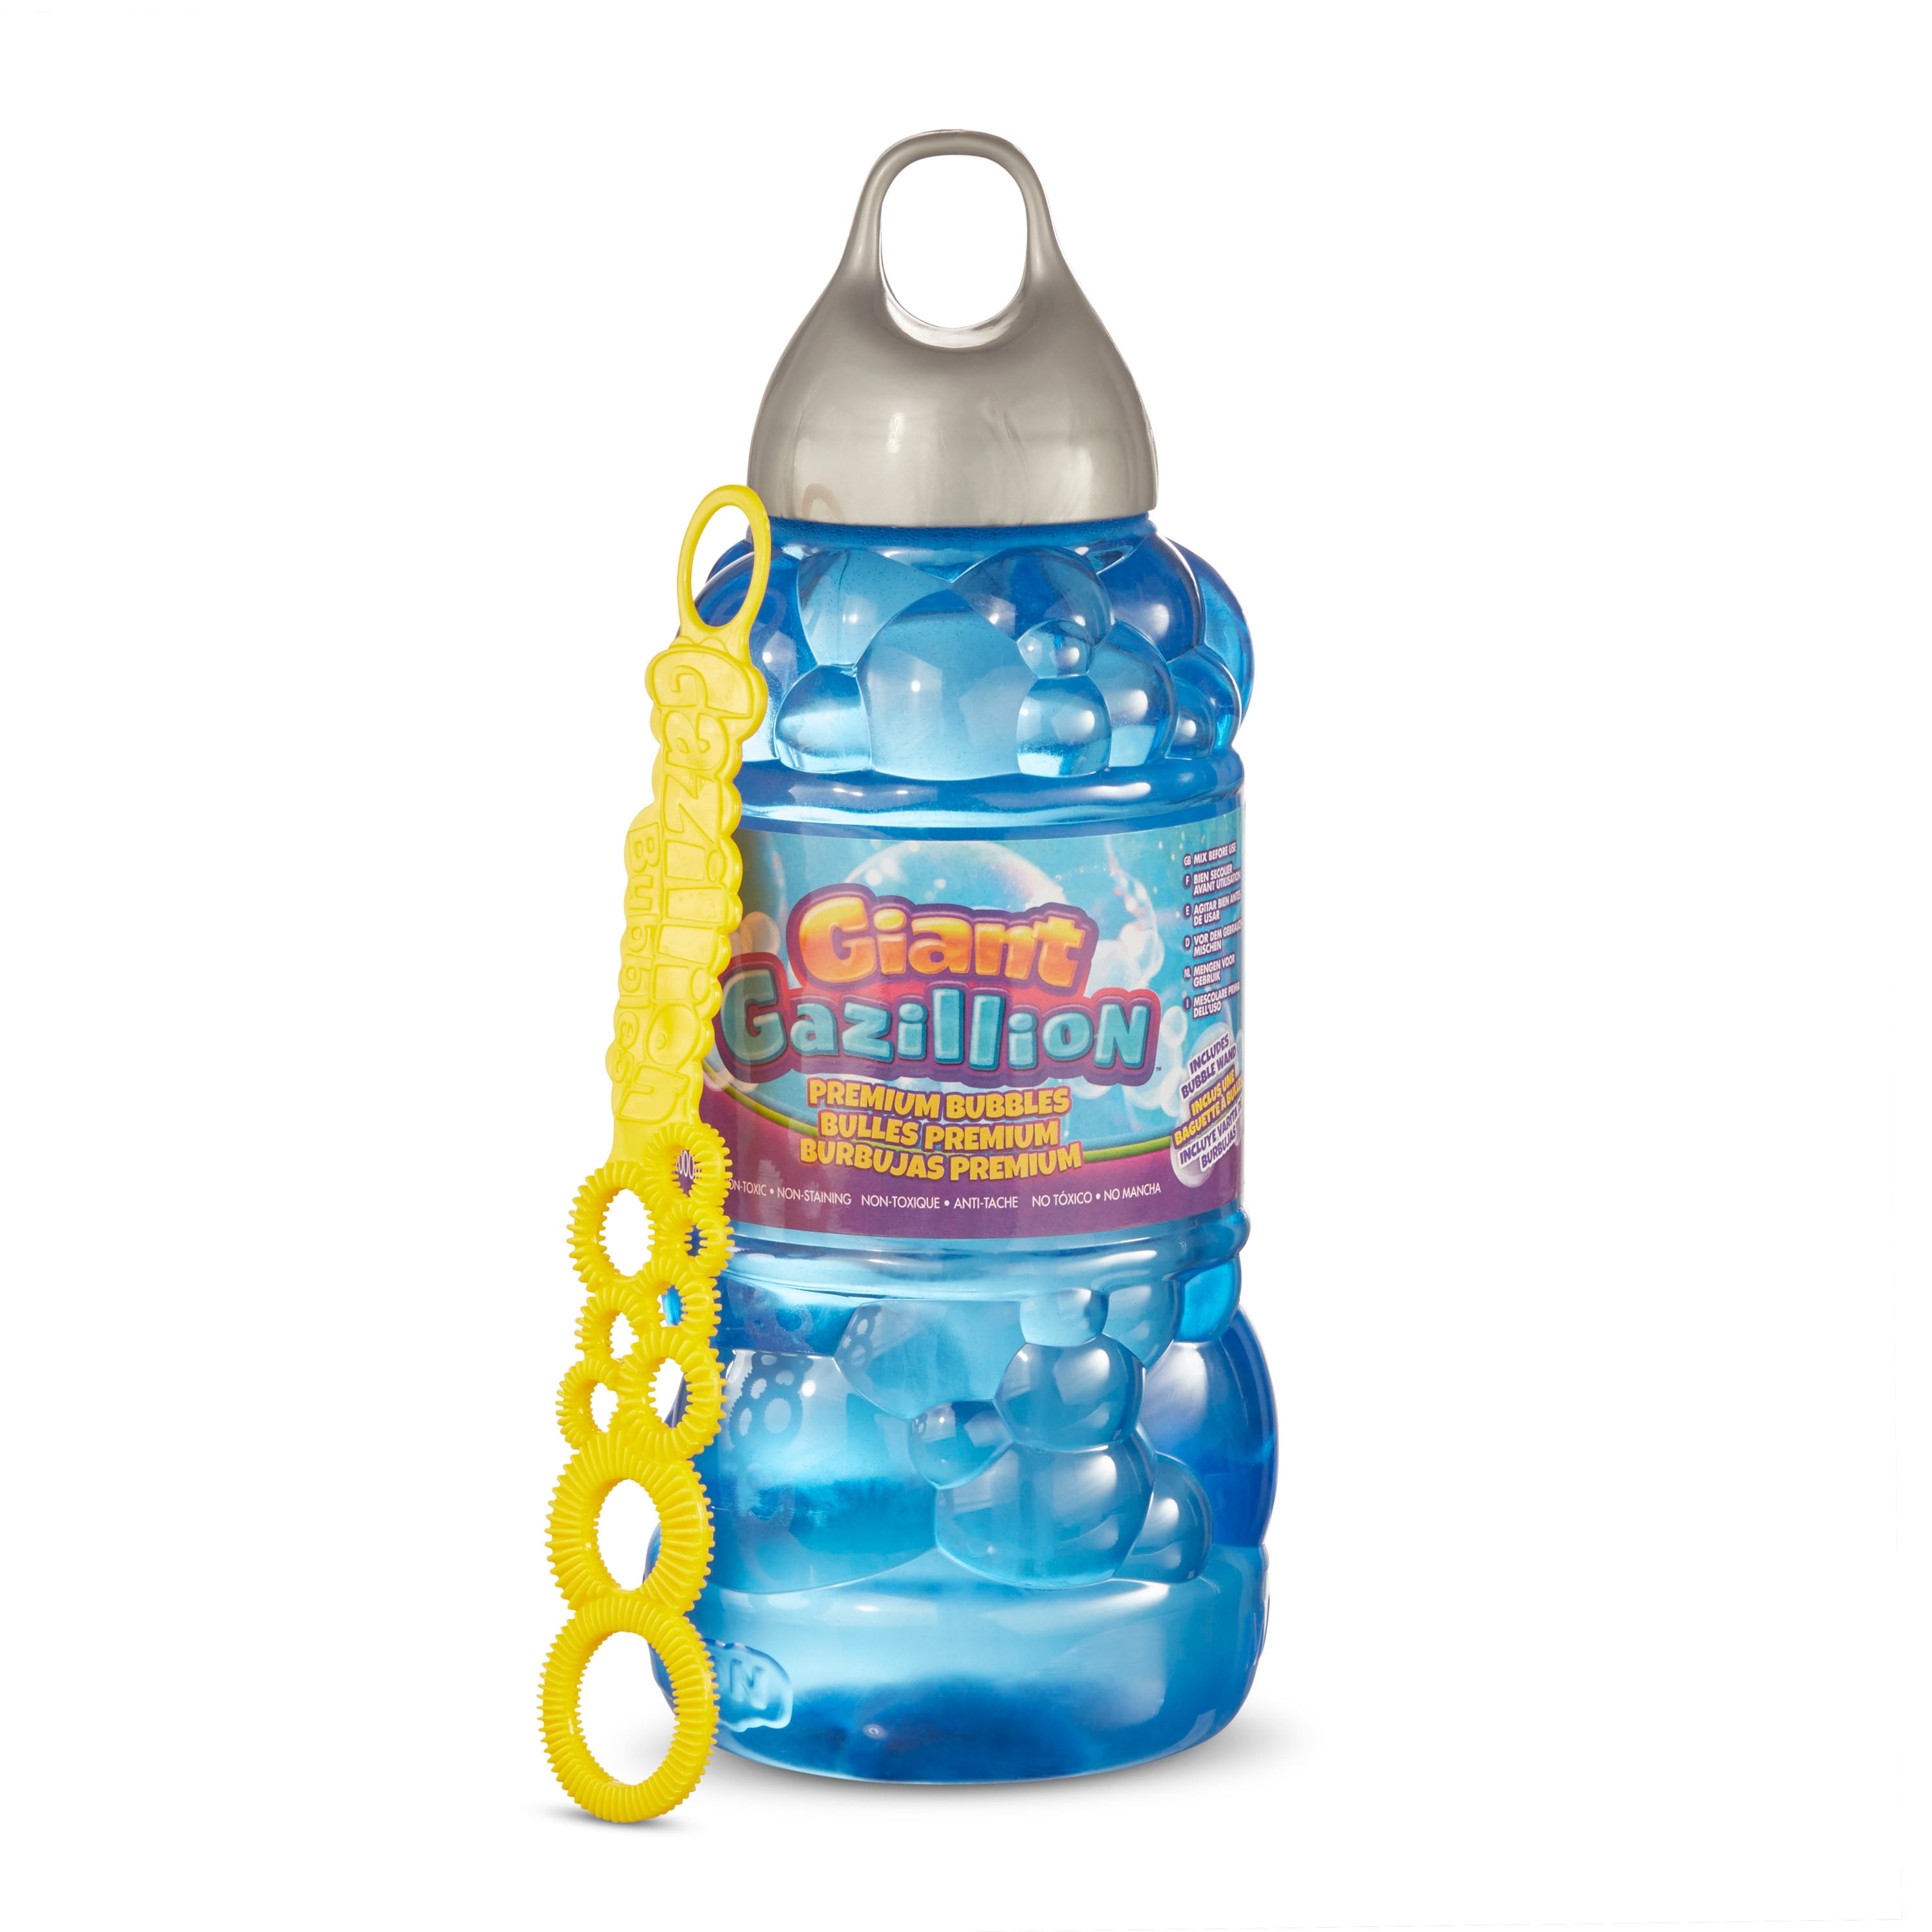 Gazillion Bubbles 4 Liter Solution - Walmart.com